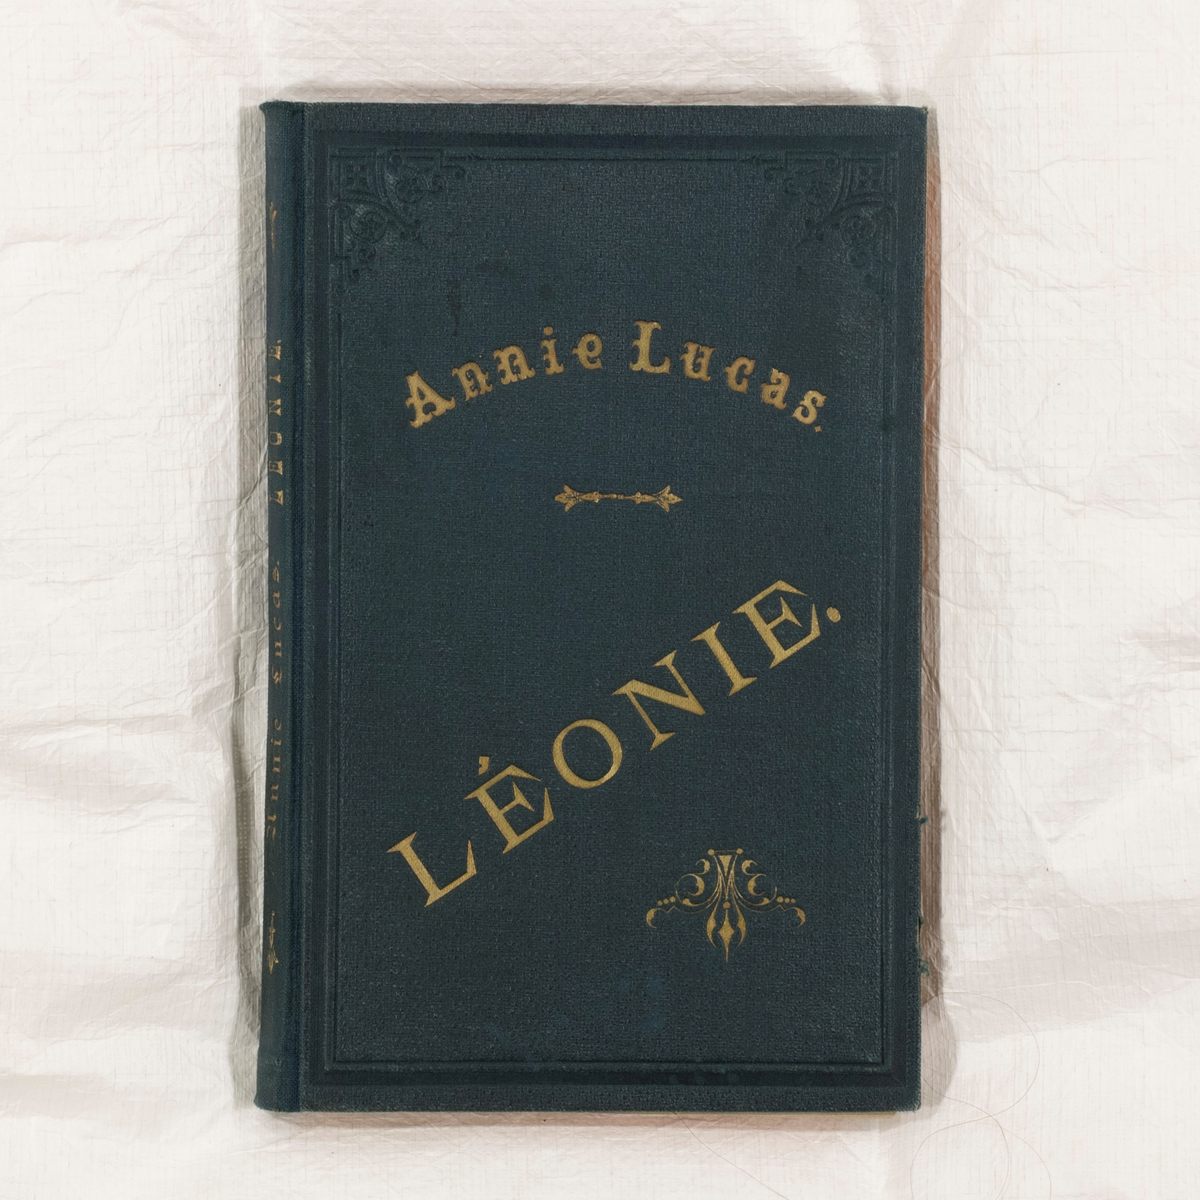 Prot: Lucas, Annie, Léonie. En Fortælling fra den tysk-franske Krig. Fra engelsk ved Kaja Ebbel. Porsgrund 1883. 3 bl. + 186 s. 8 Blaagrønt shirtingsbd med gullprent.